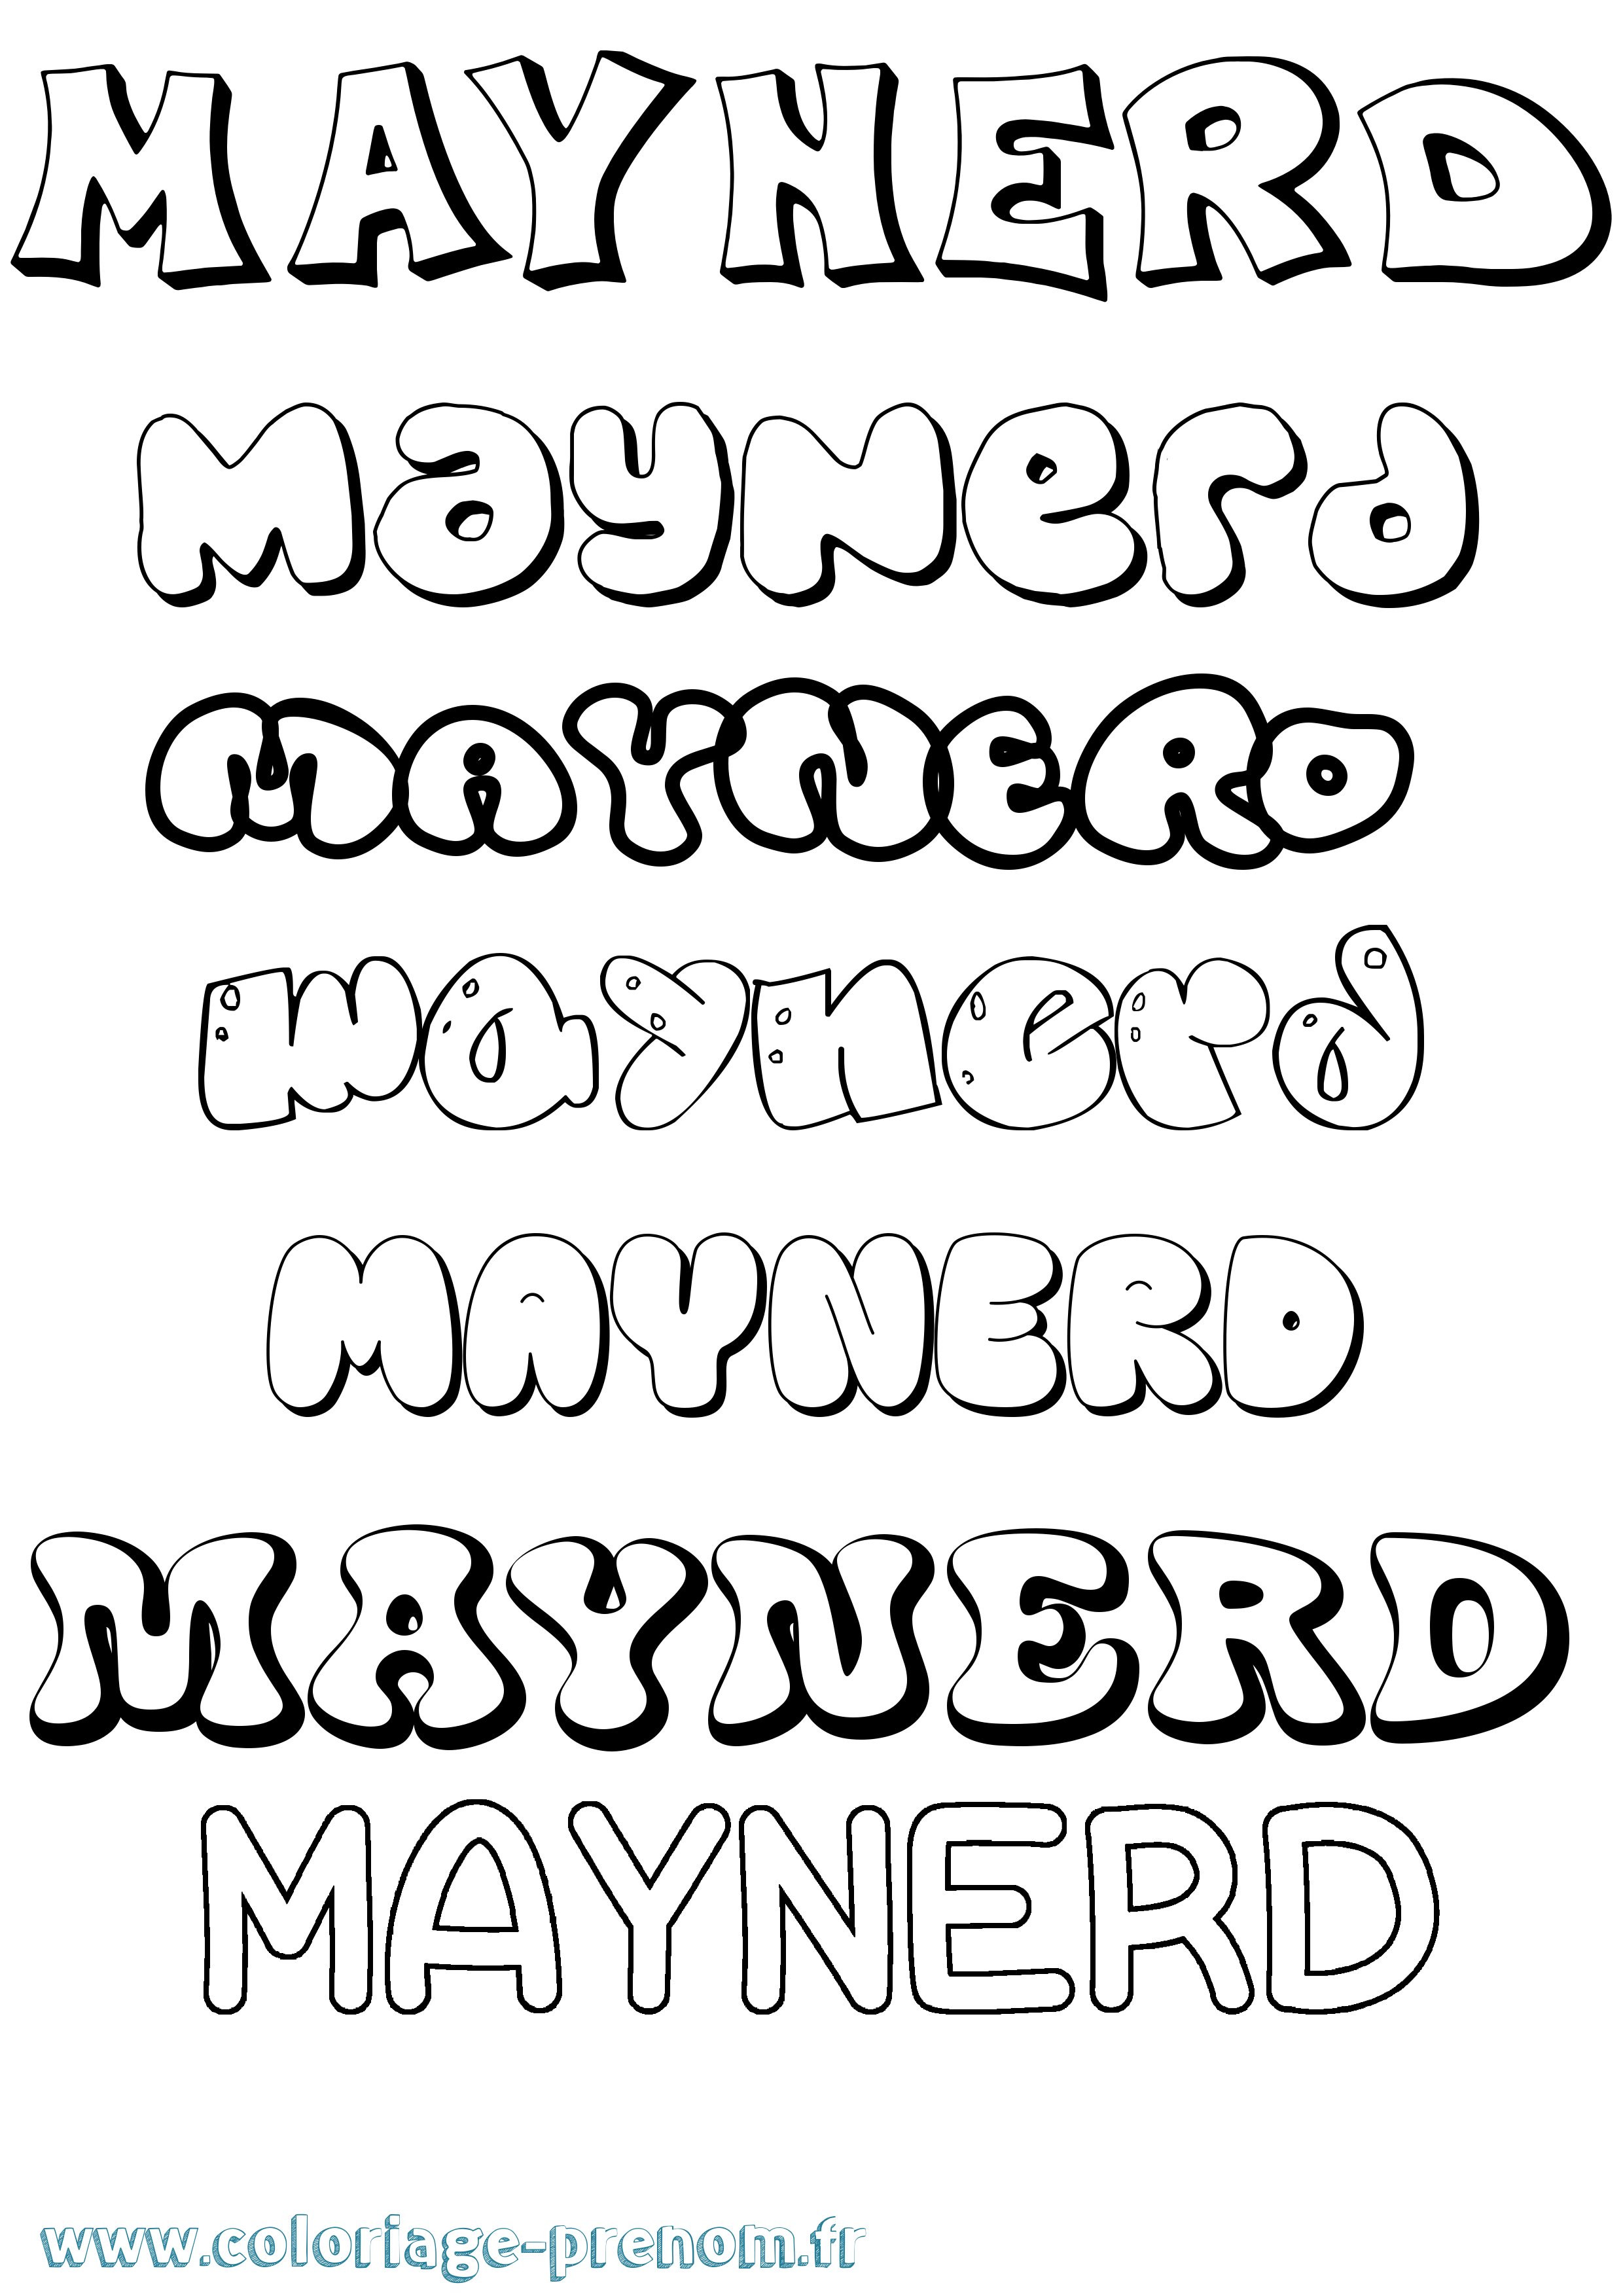 Coloriage prénom Maynerd Bubble